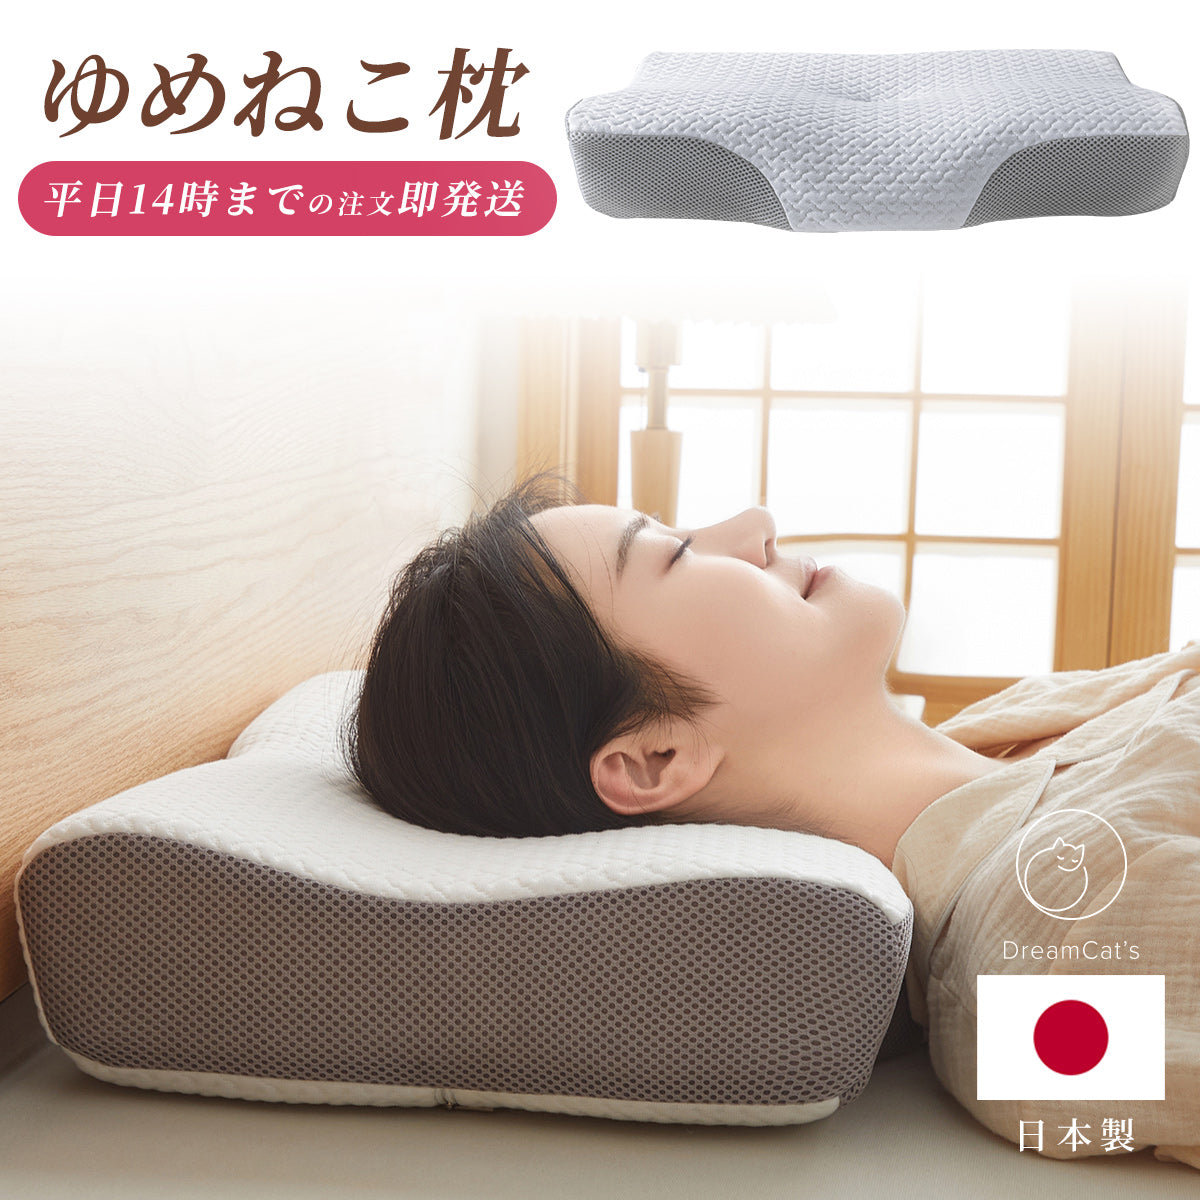 HILO1】プレミアム低反発枕 人間工学に基づいたデザイン 高さ調節可能 